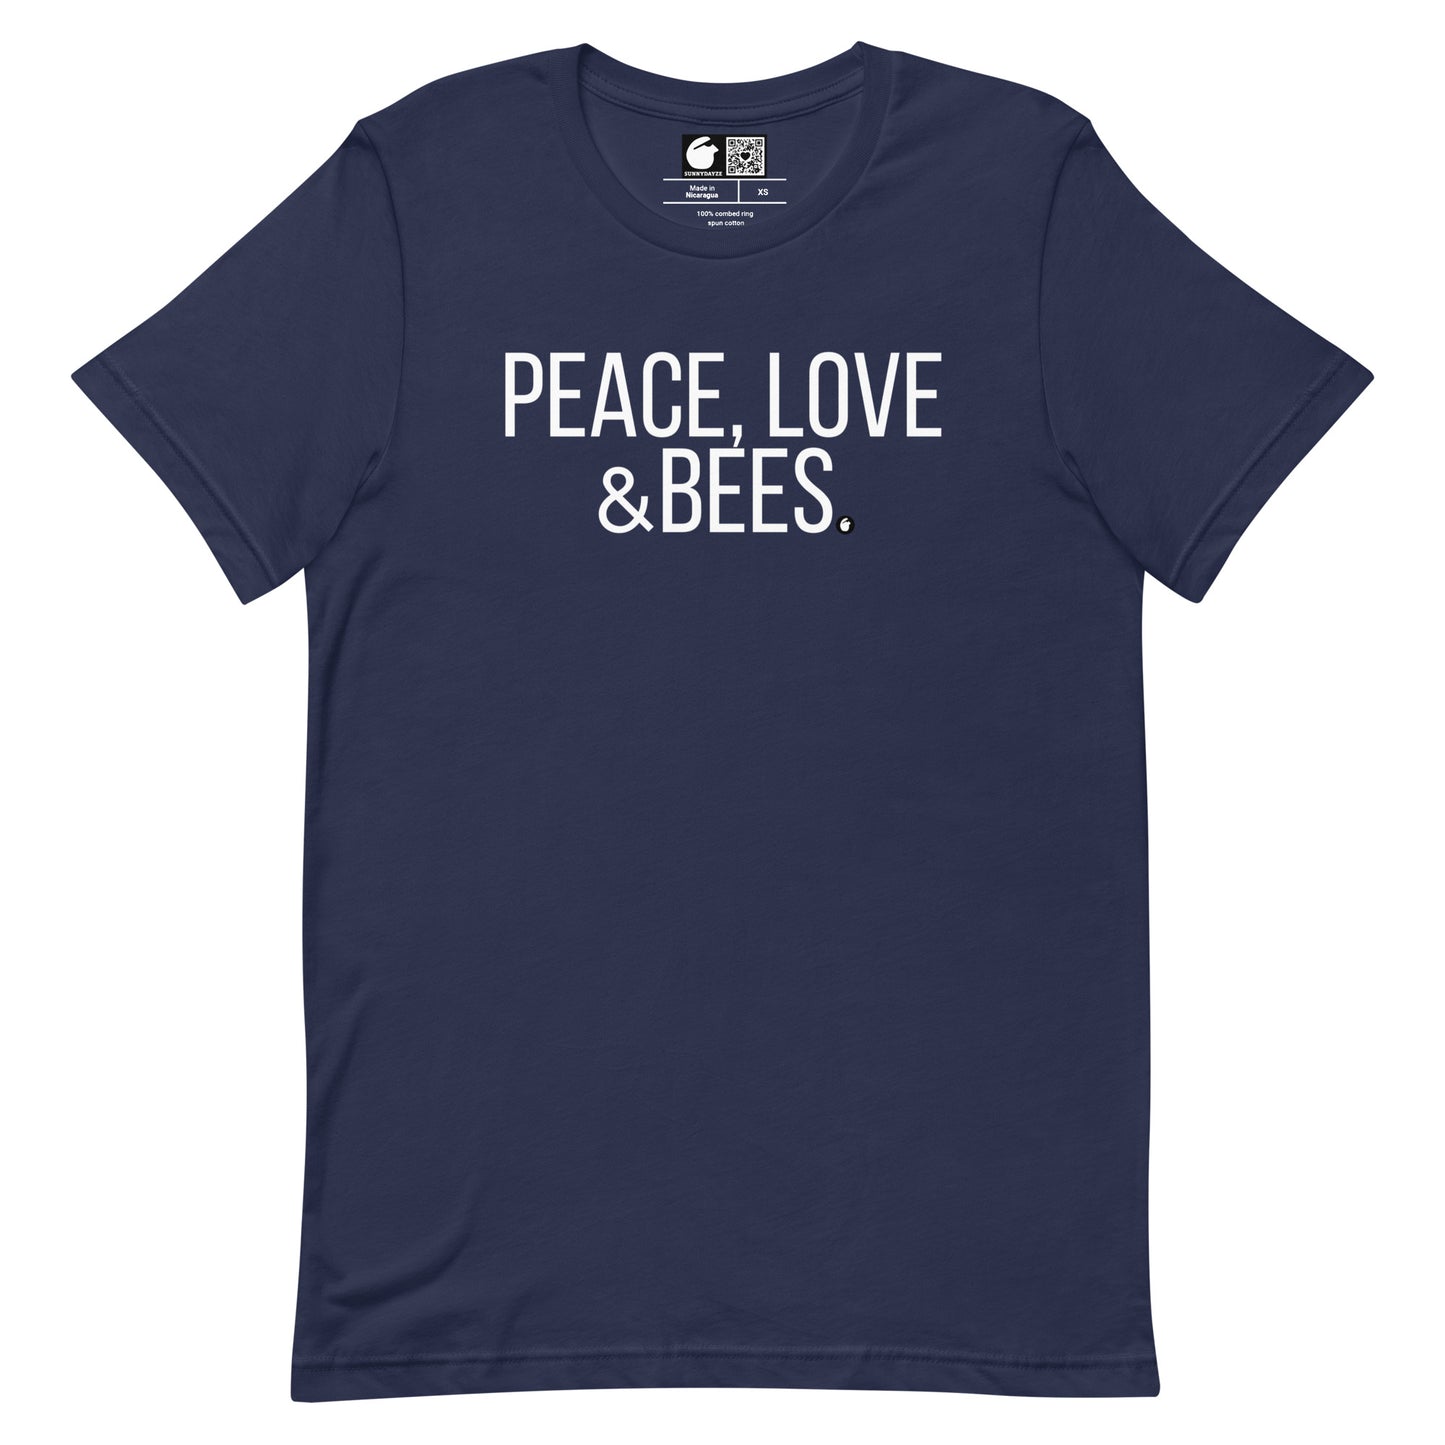 BEES Short-Sleeve Unisex t-shirt